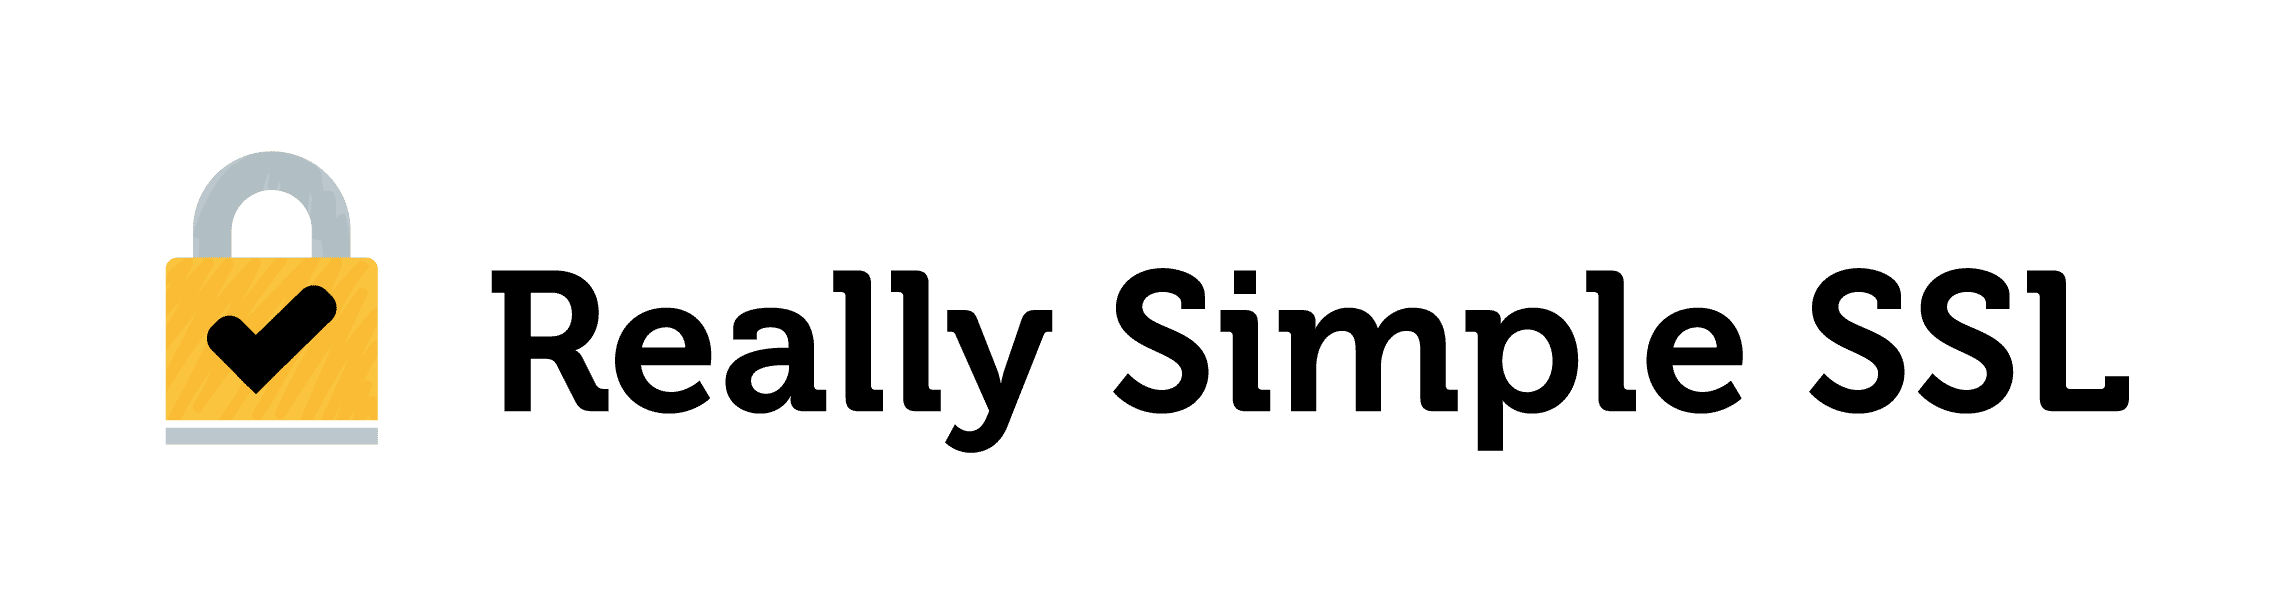 Really-Simple-SSL-Logo-04